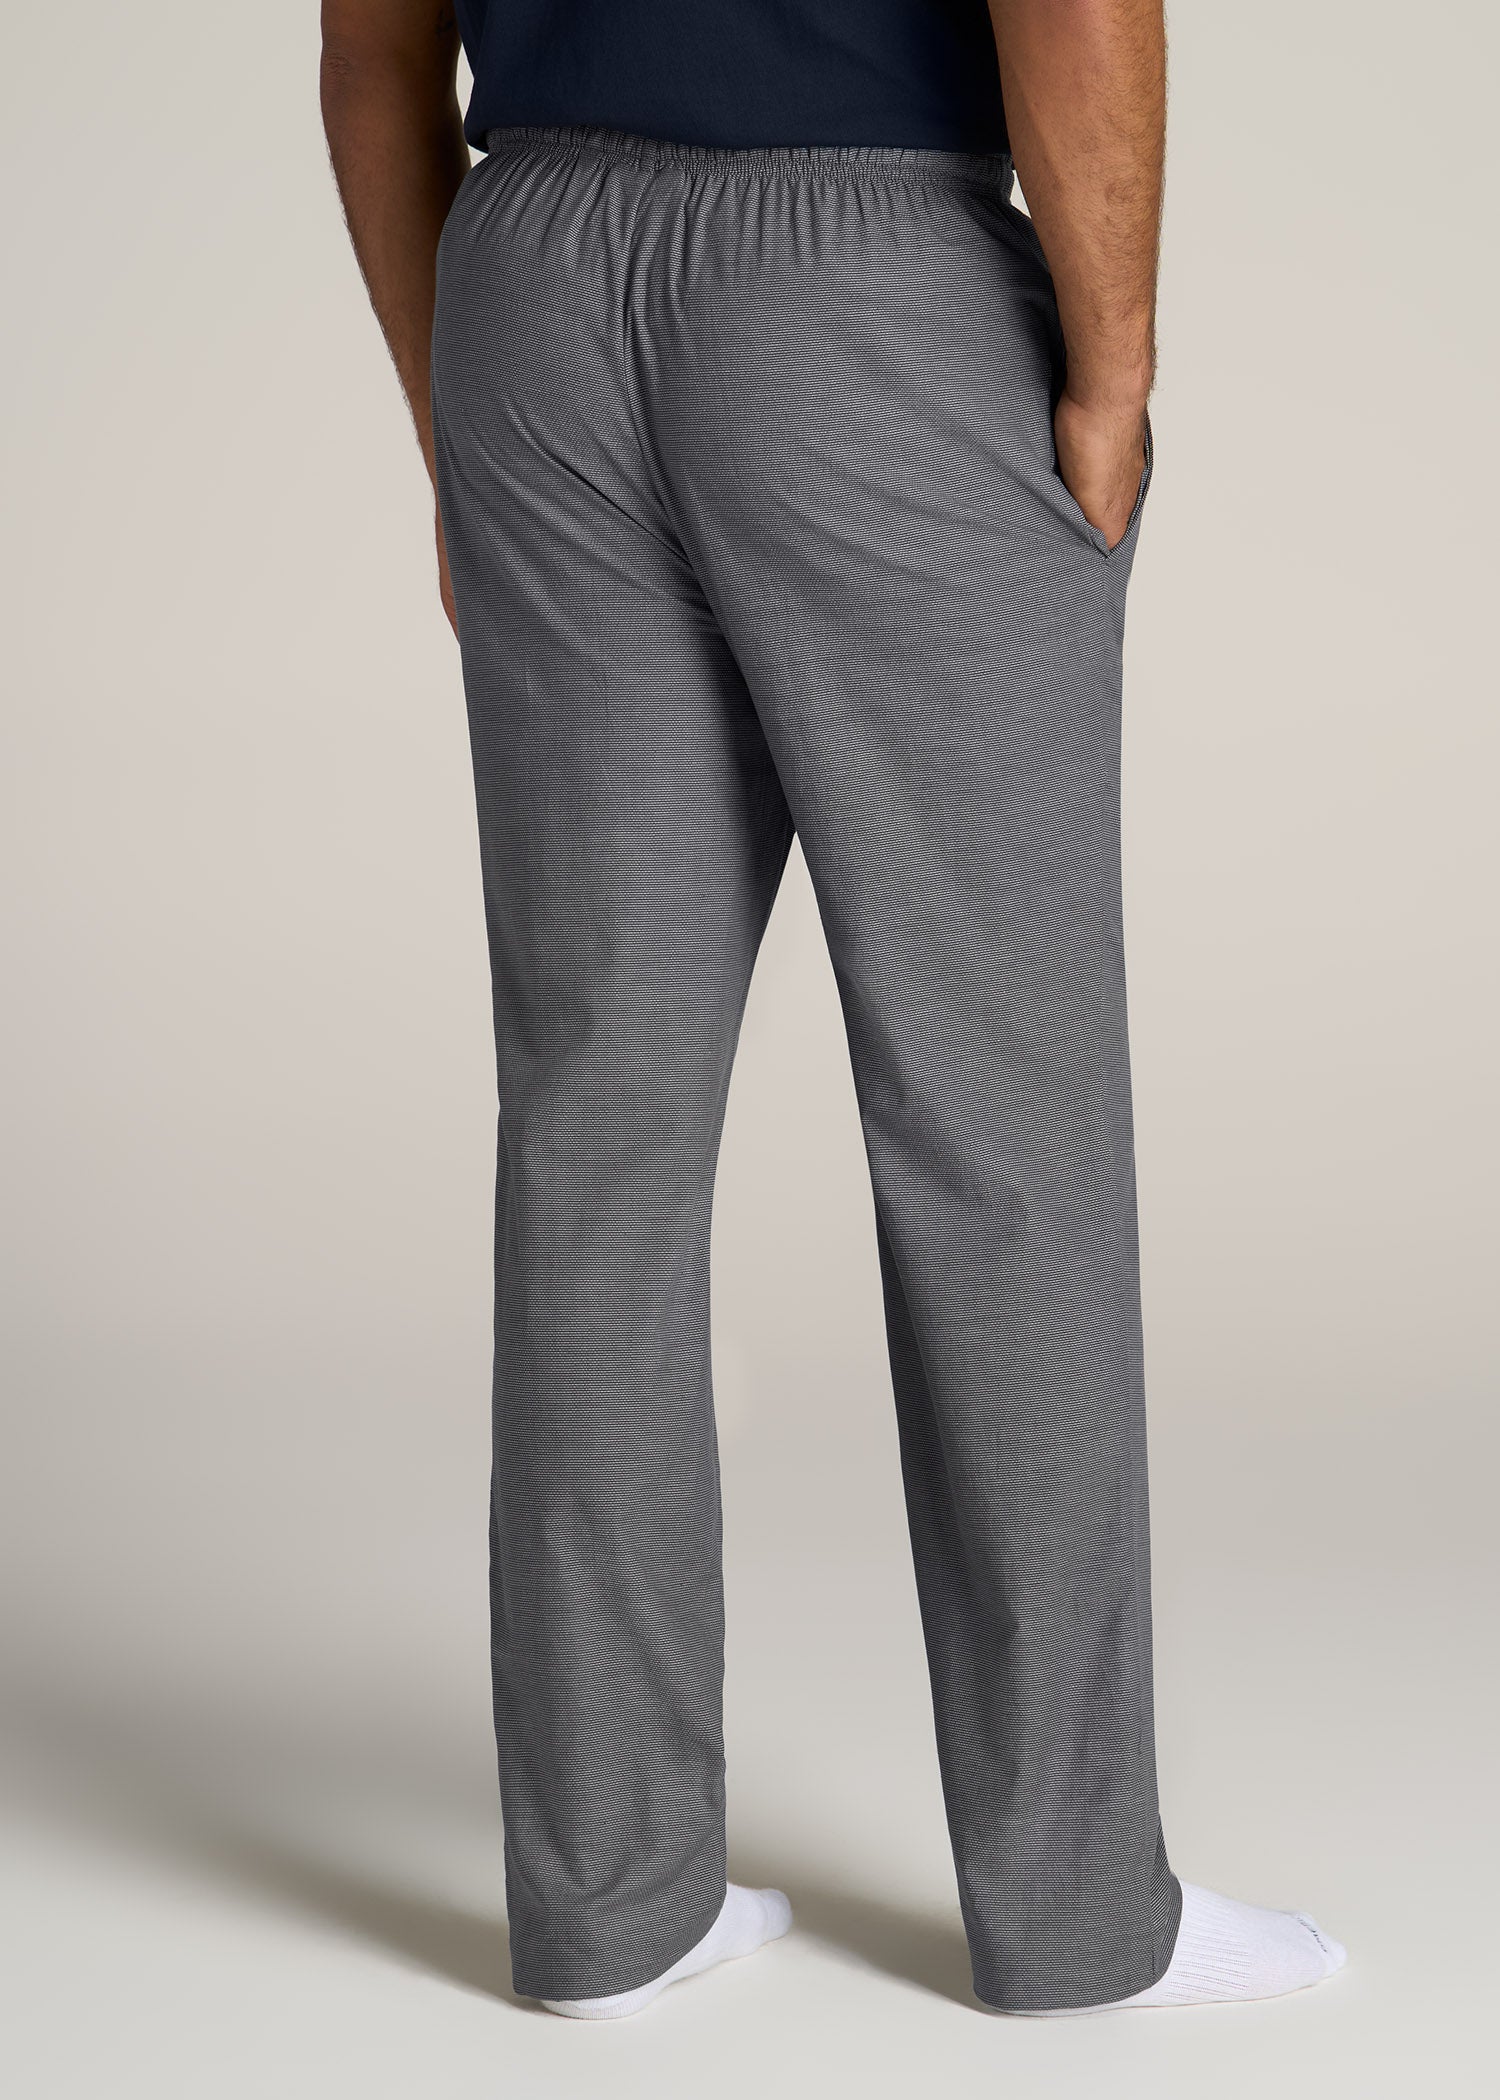 True Religion 2 Pack Fleece Pajama Pants for Men, PJ Pants Men's Sleepwear  at Amazon Men's Clothing store